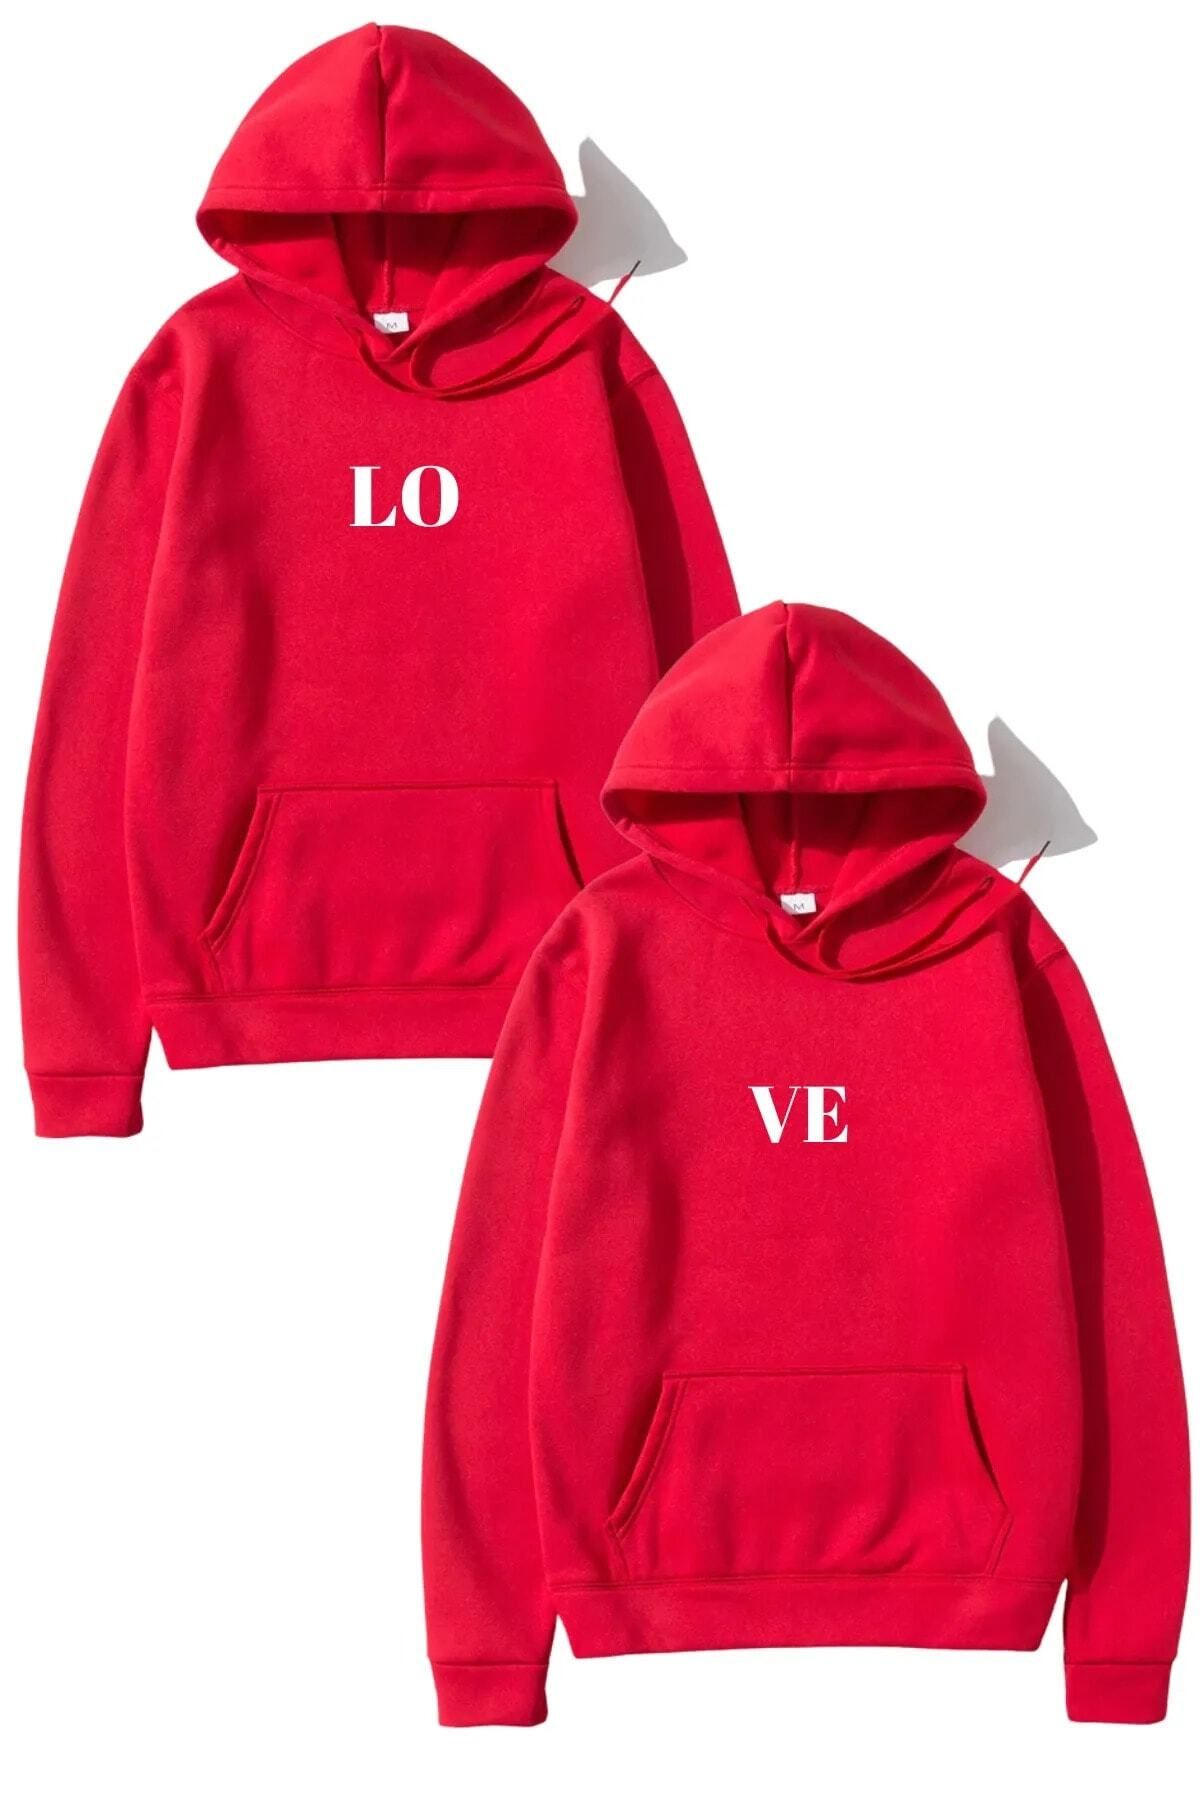 blausee wear Sevgili Çift Kombini Love Sembol Tasarım 2'li Ürün Kırmızı Siyah Kapüşonlu Sweatshirt